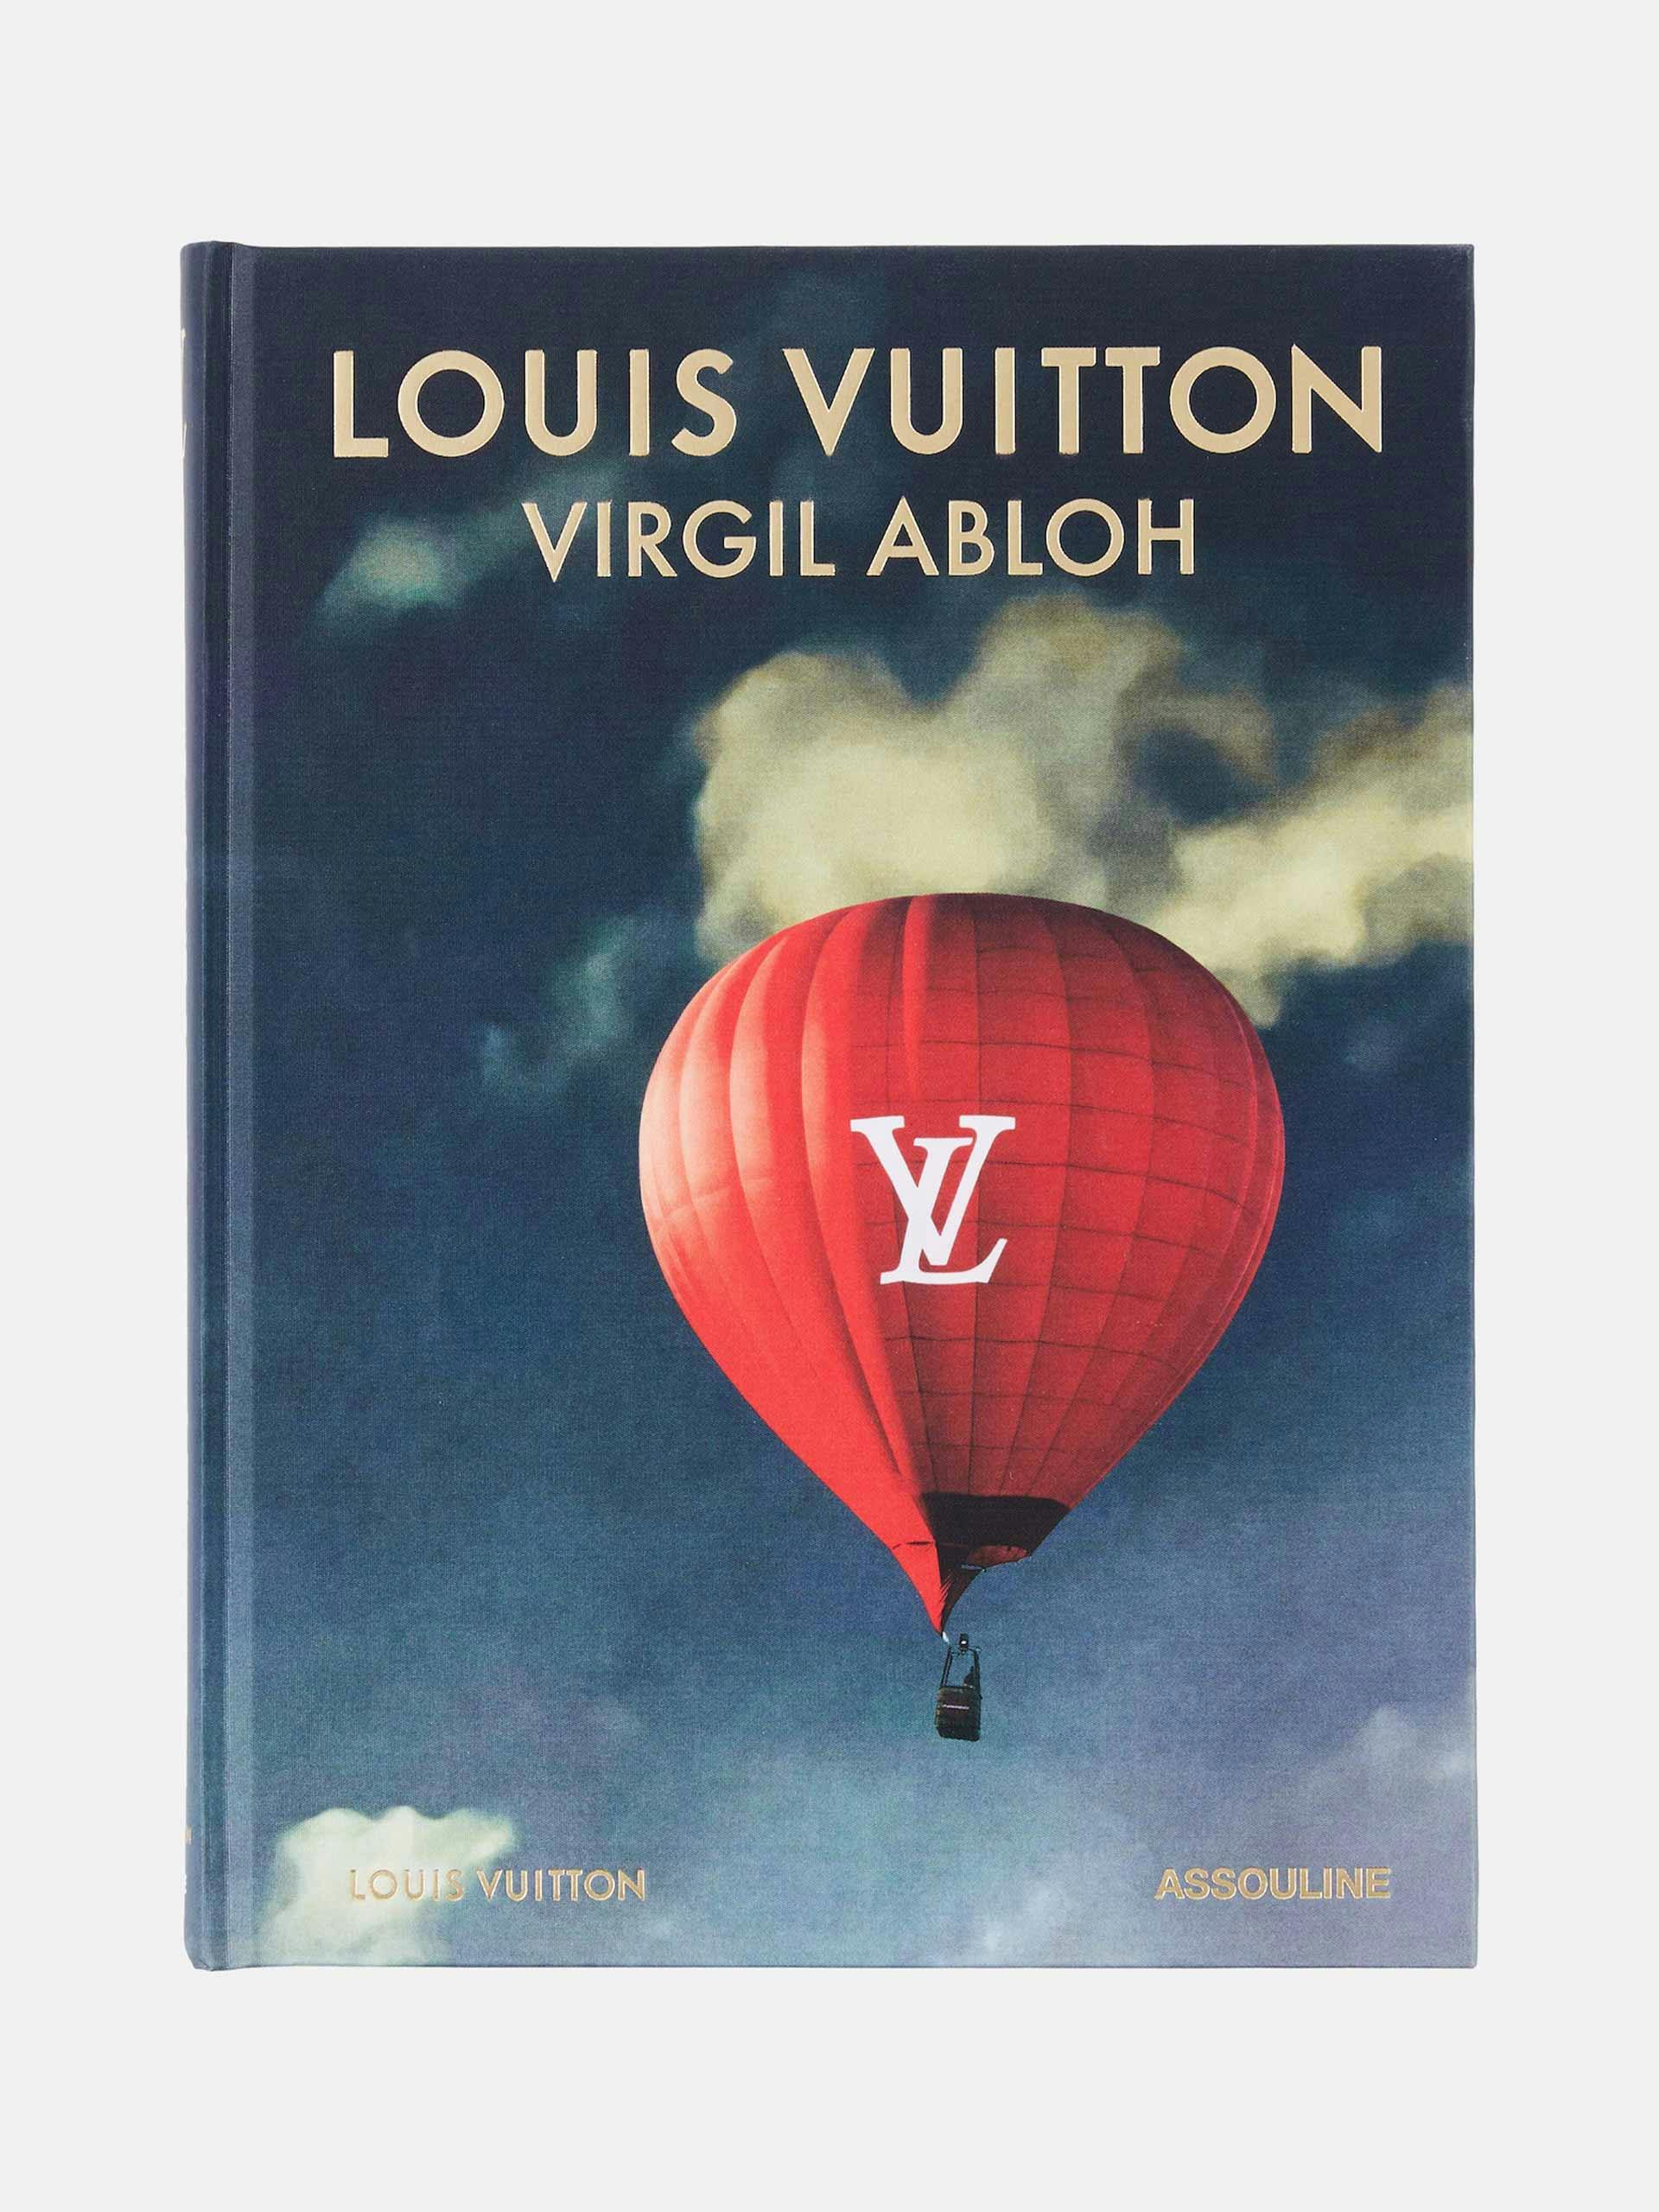 Louis Vuitton: Virgil Abloh book